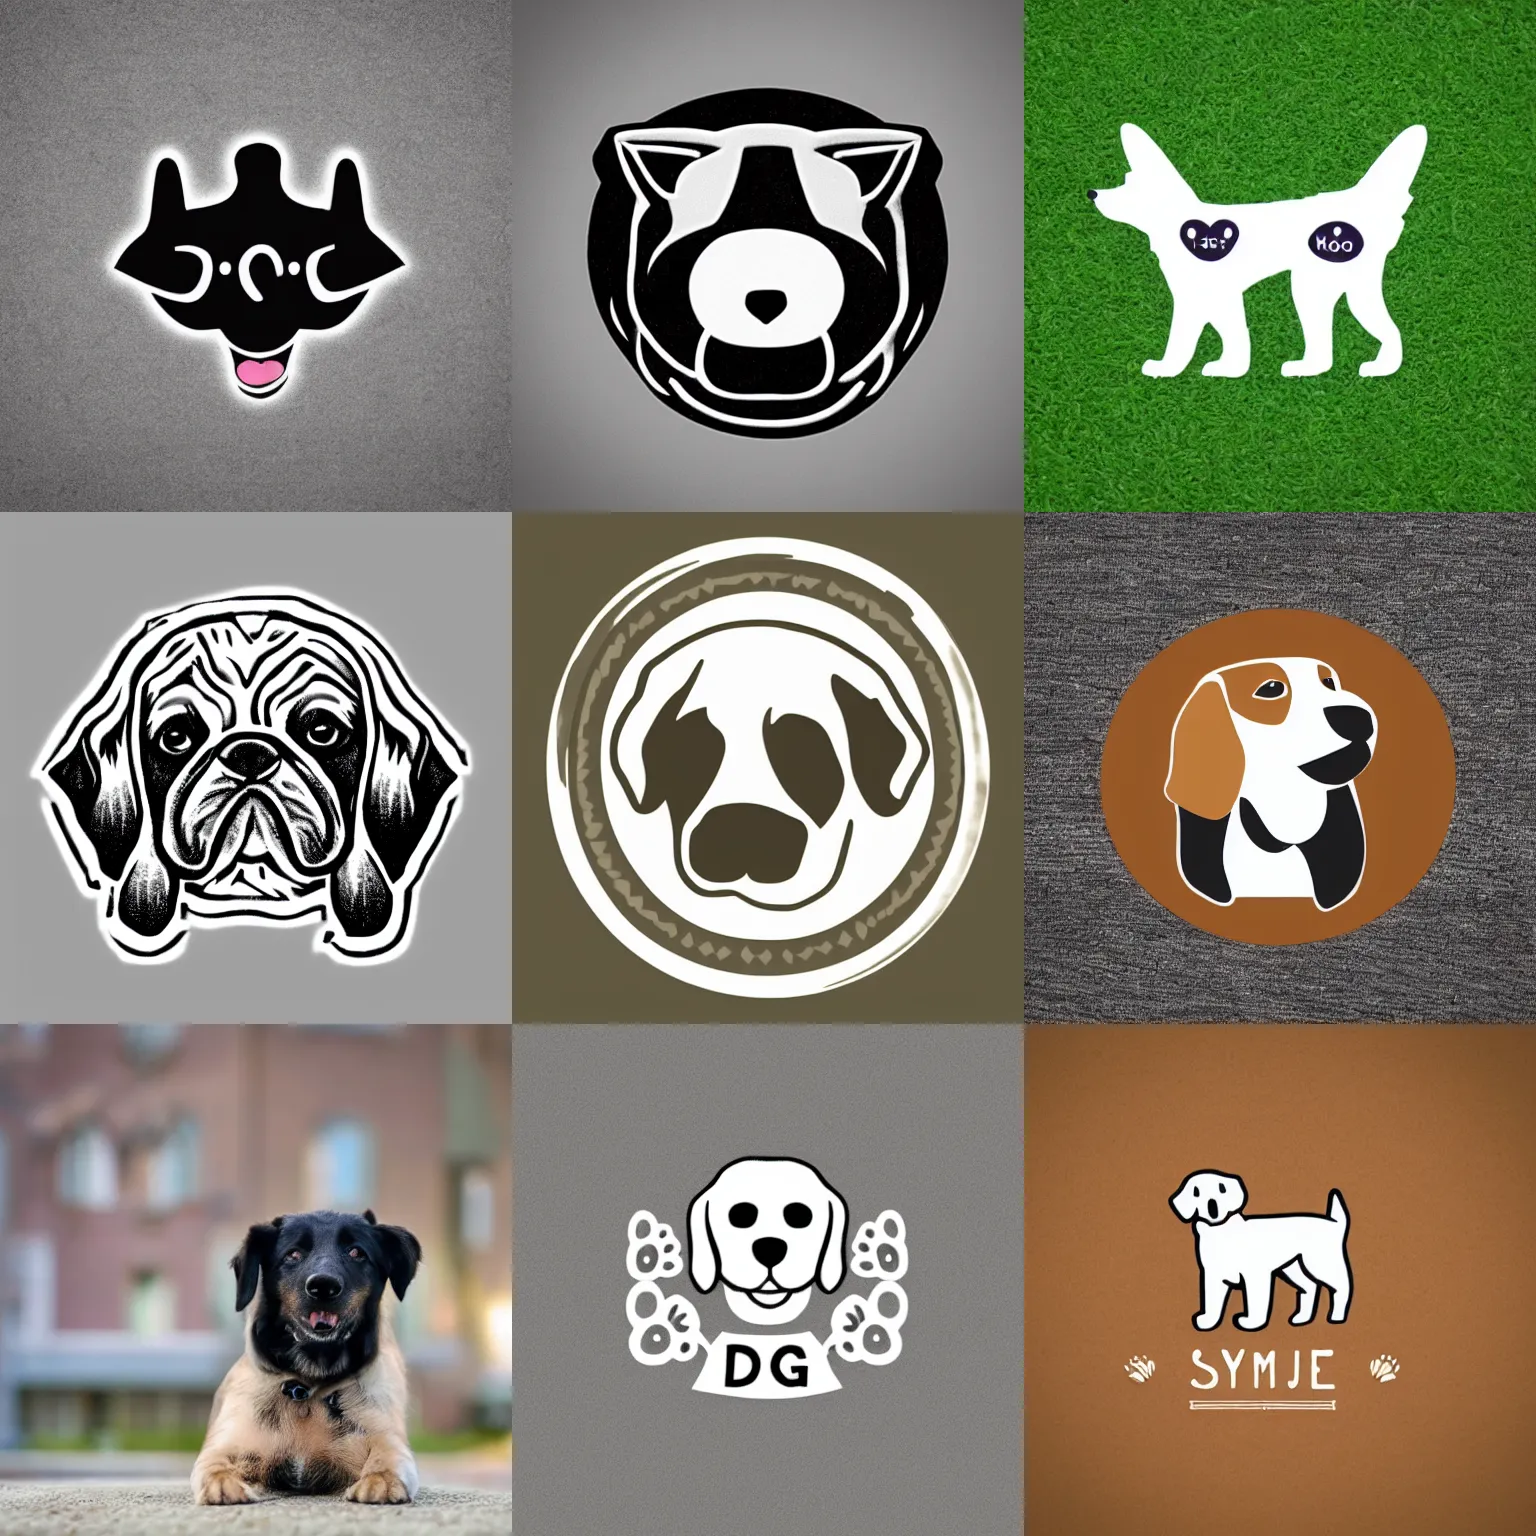 Prompt: A cute logo of a dog, symmetric